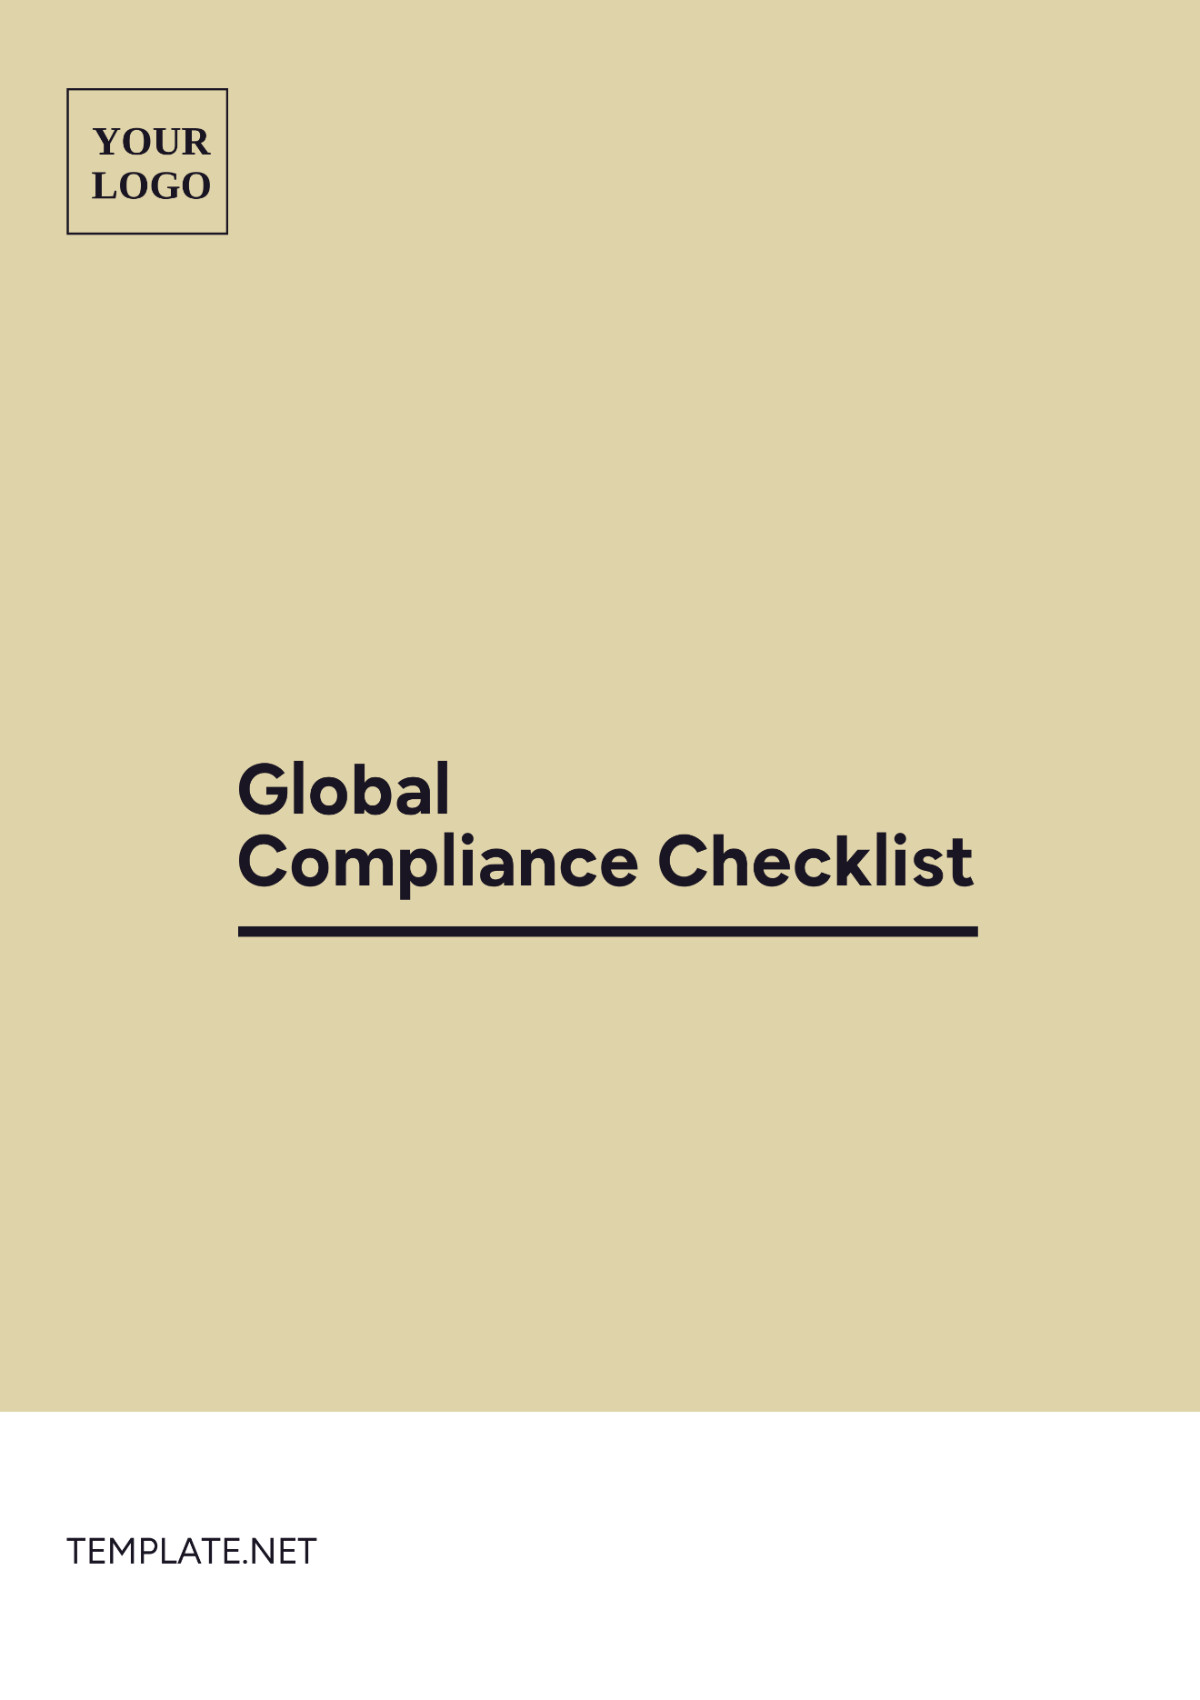 Global Compliance Checklist Template